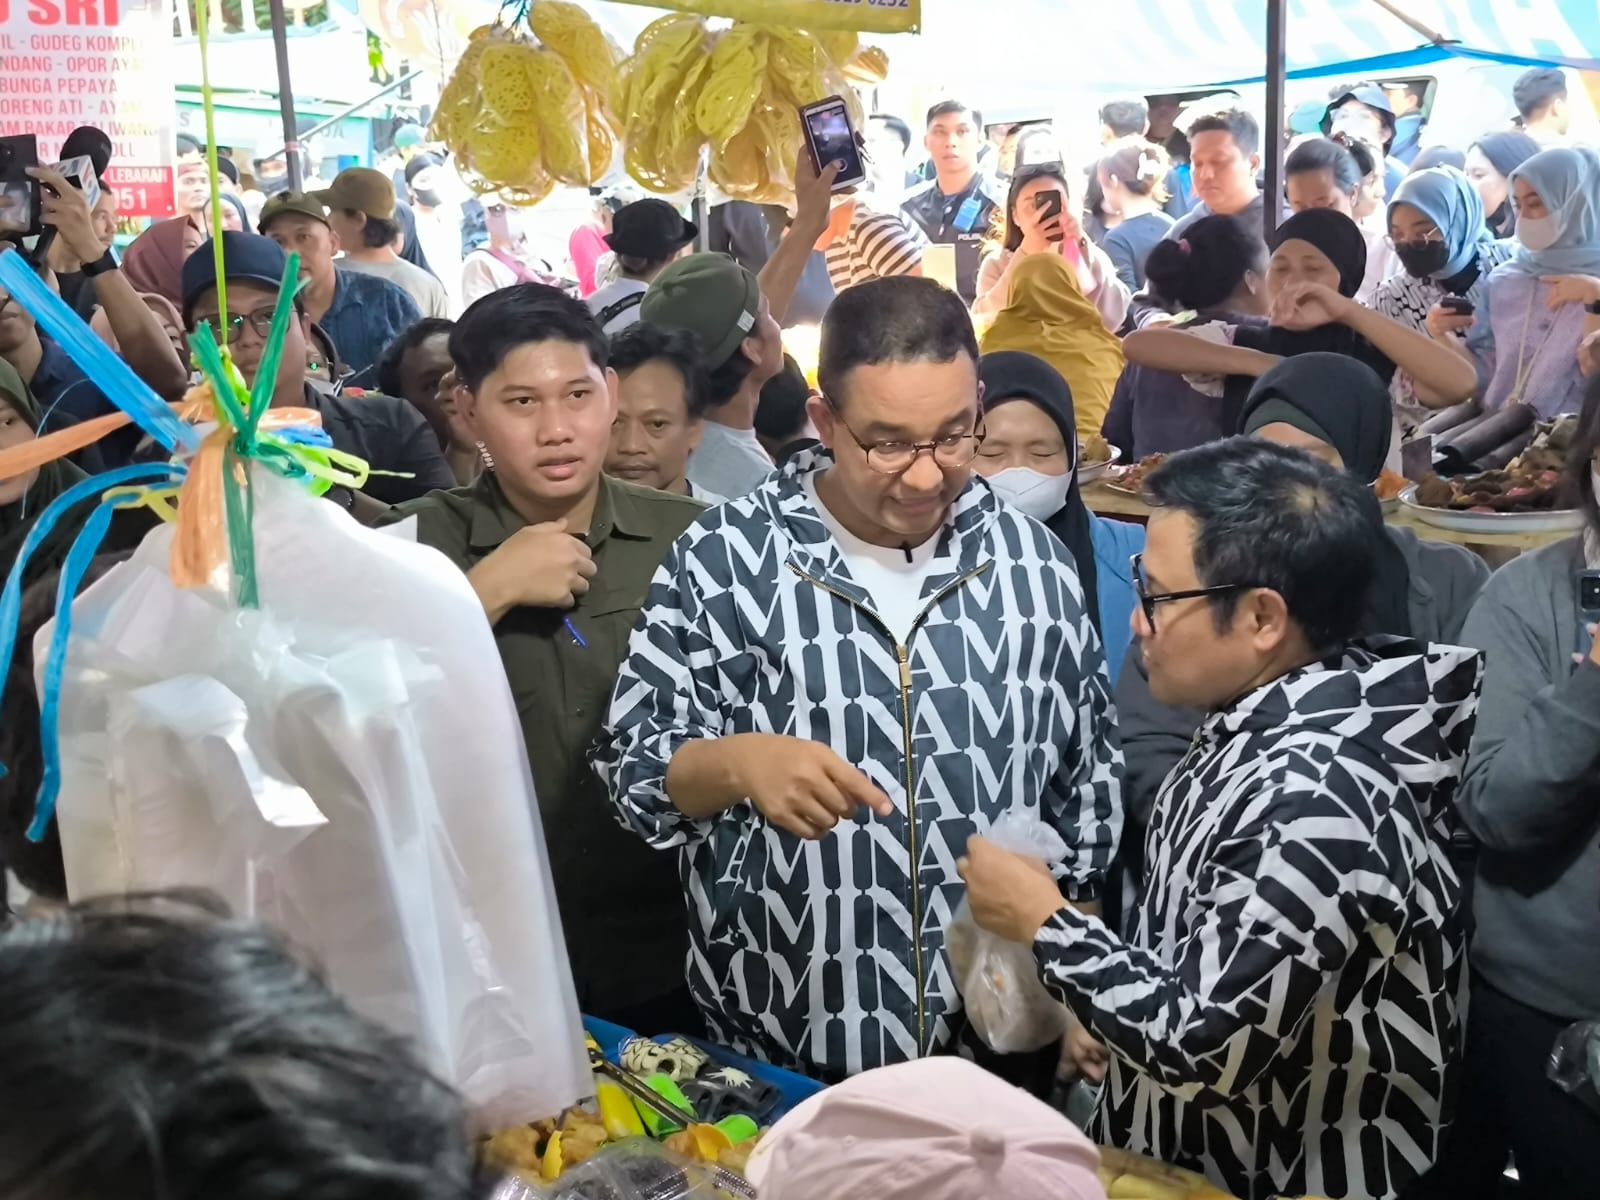 Jelang Pengumuman KPU, Anies-Cak Imin War Takjil di Pasar Benhil